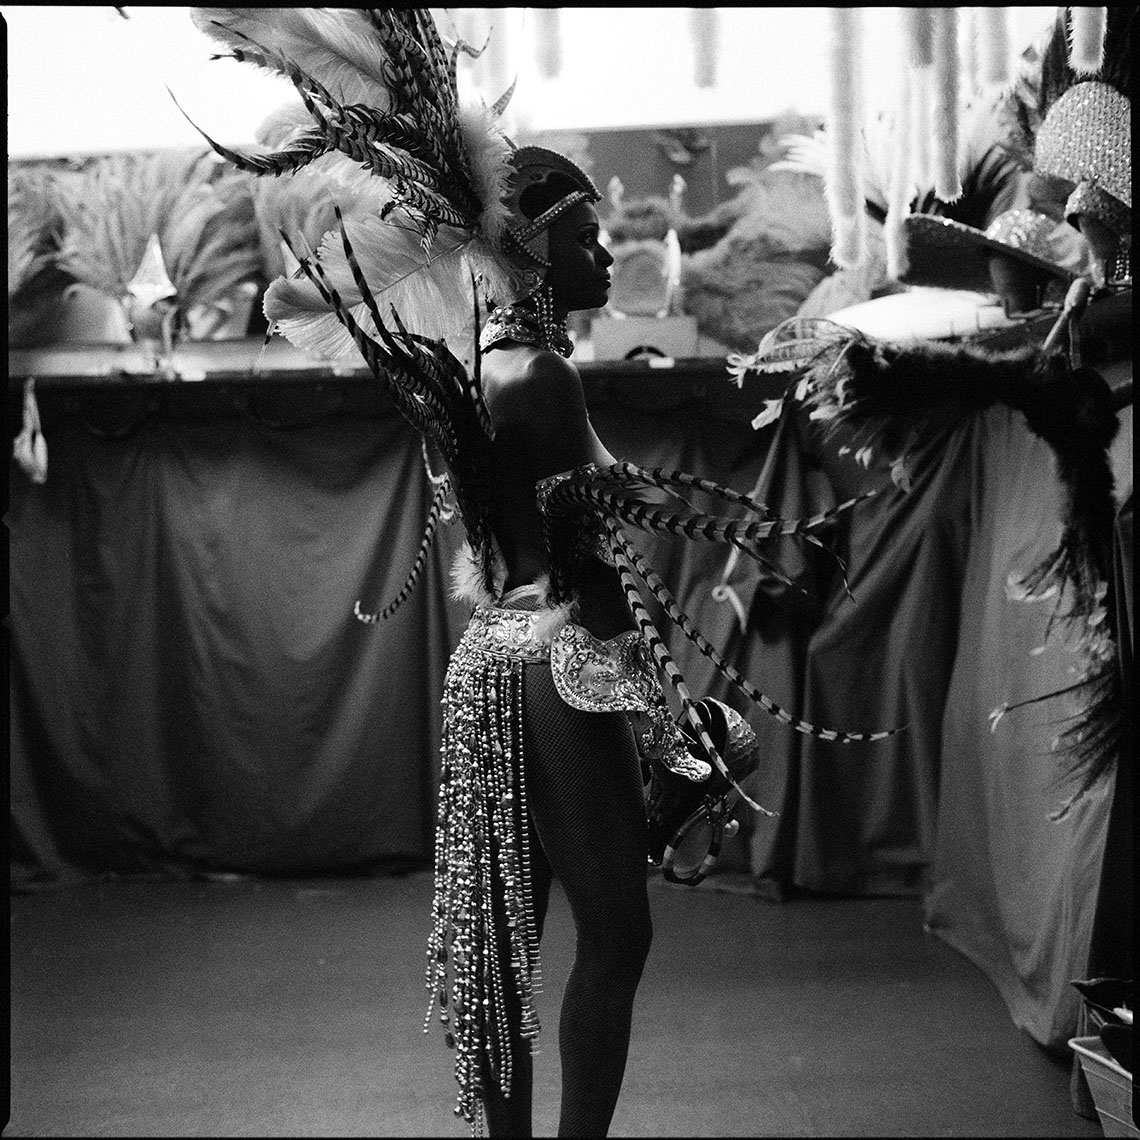 Backstage at Le Moulin Rouge in Paris